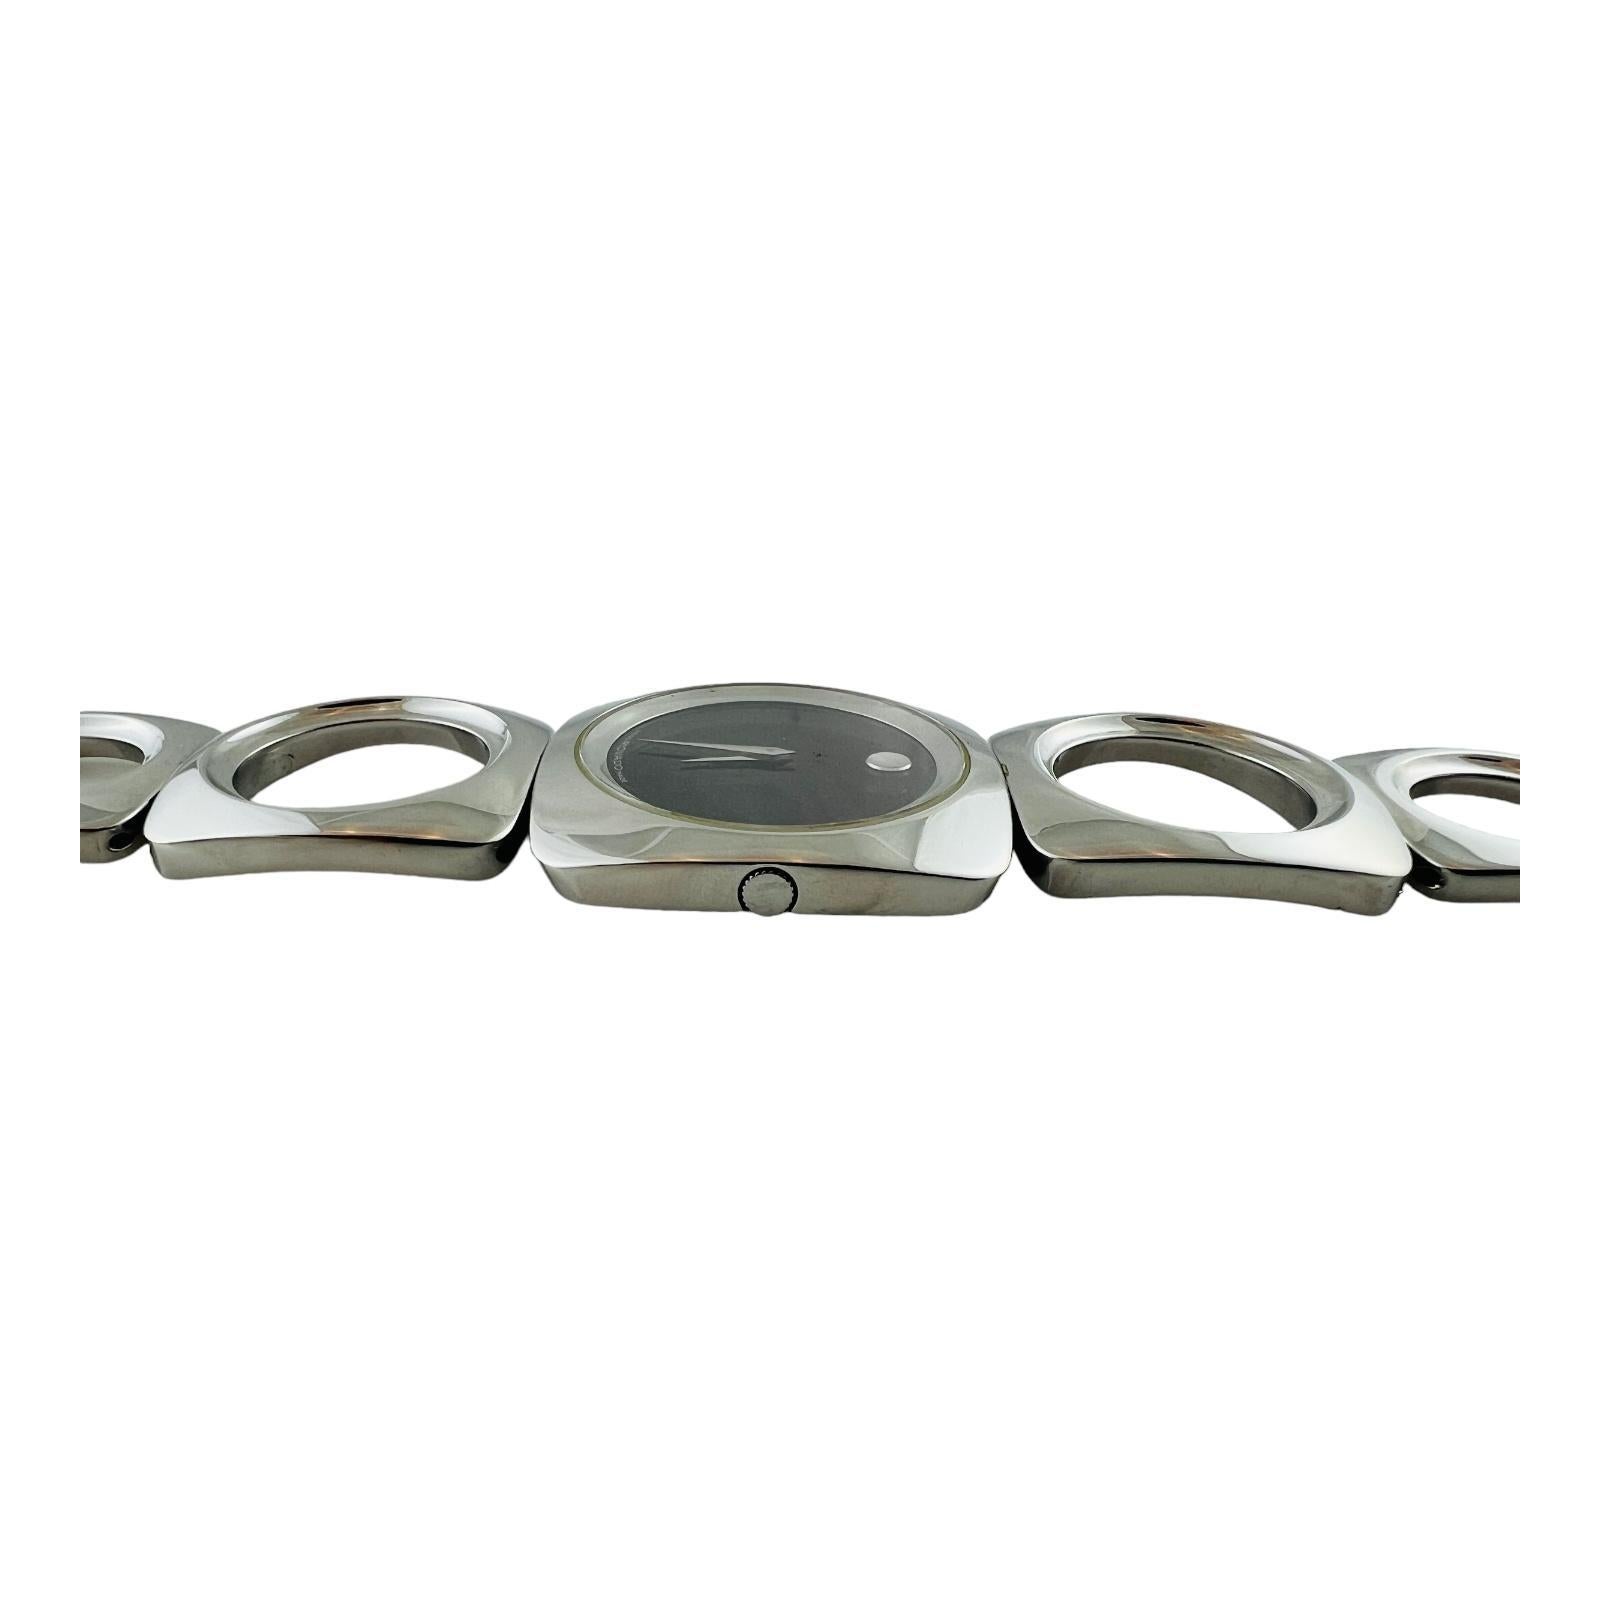 Movado Dolce Ladies Bracelet Watch 84 G2 1330 box #15796 For Sale 1